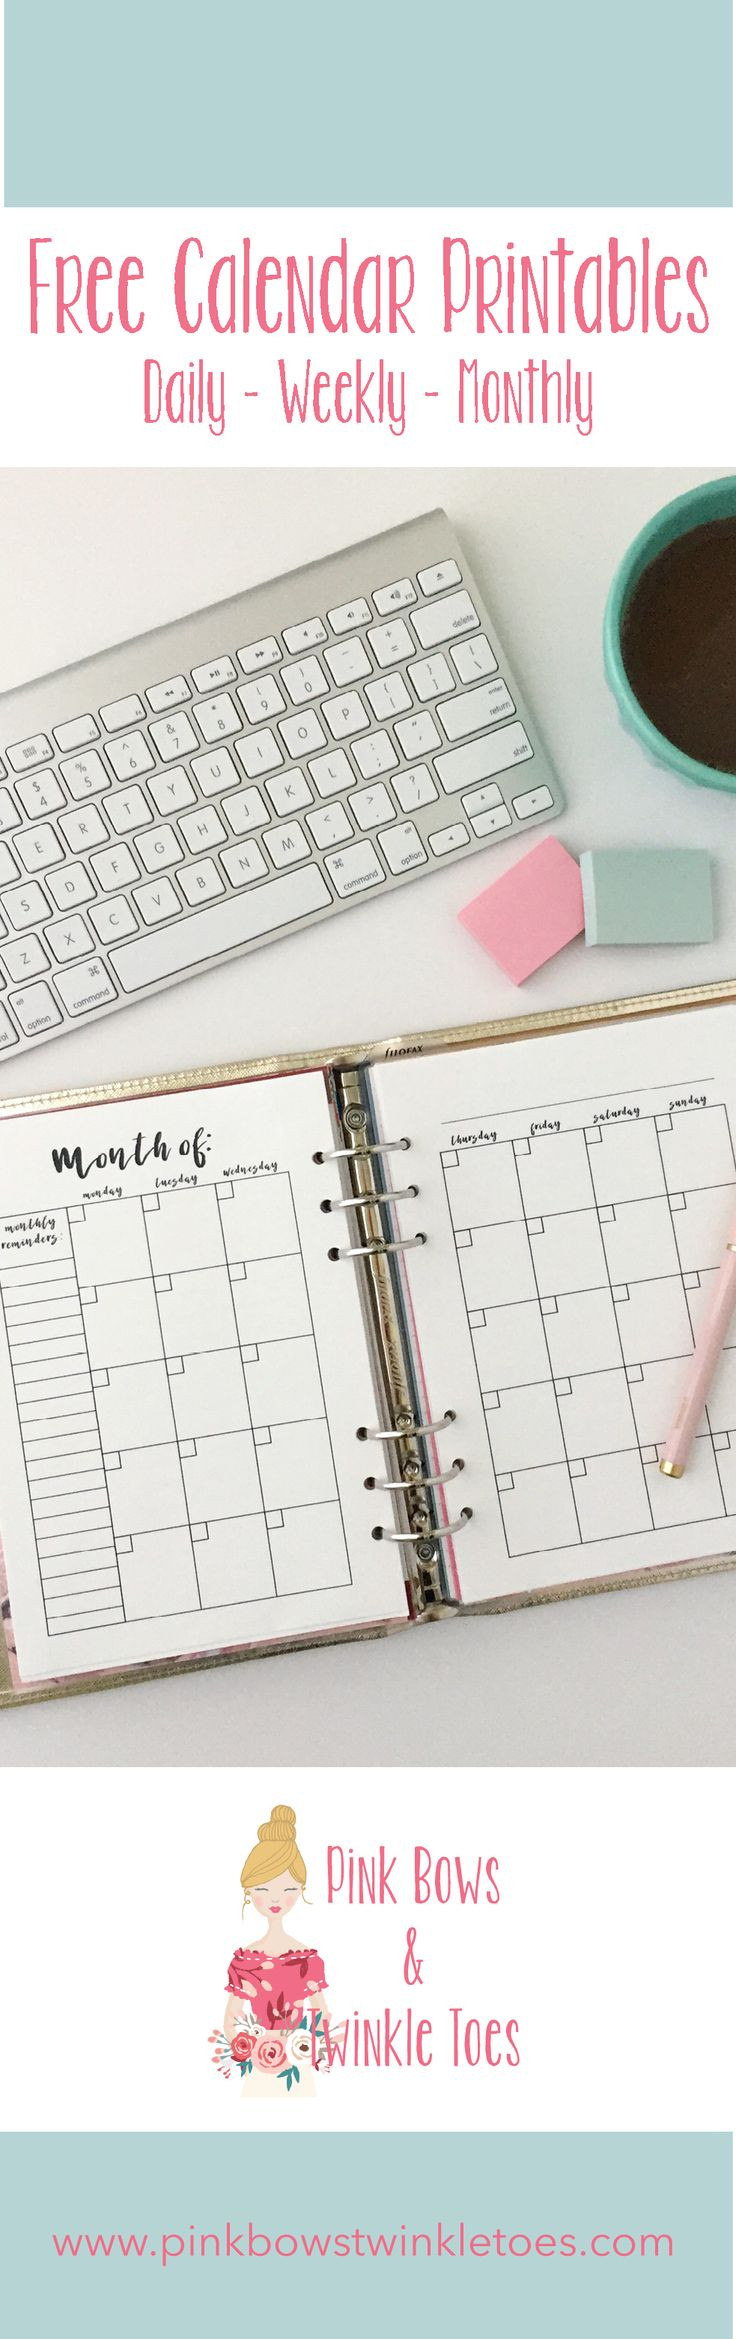 Calendar Organizer Planner
 Best 25 Mini binder ideas on Pinterest